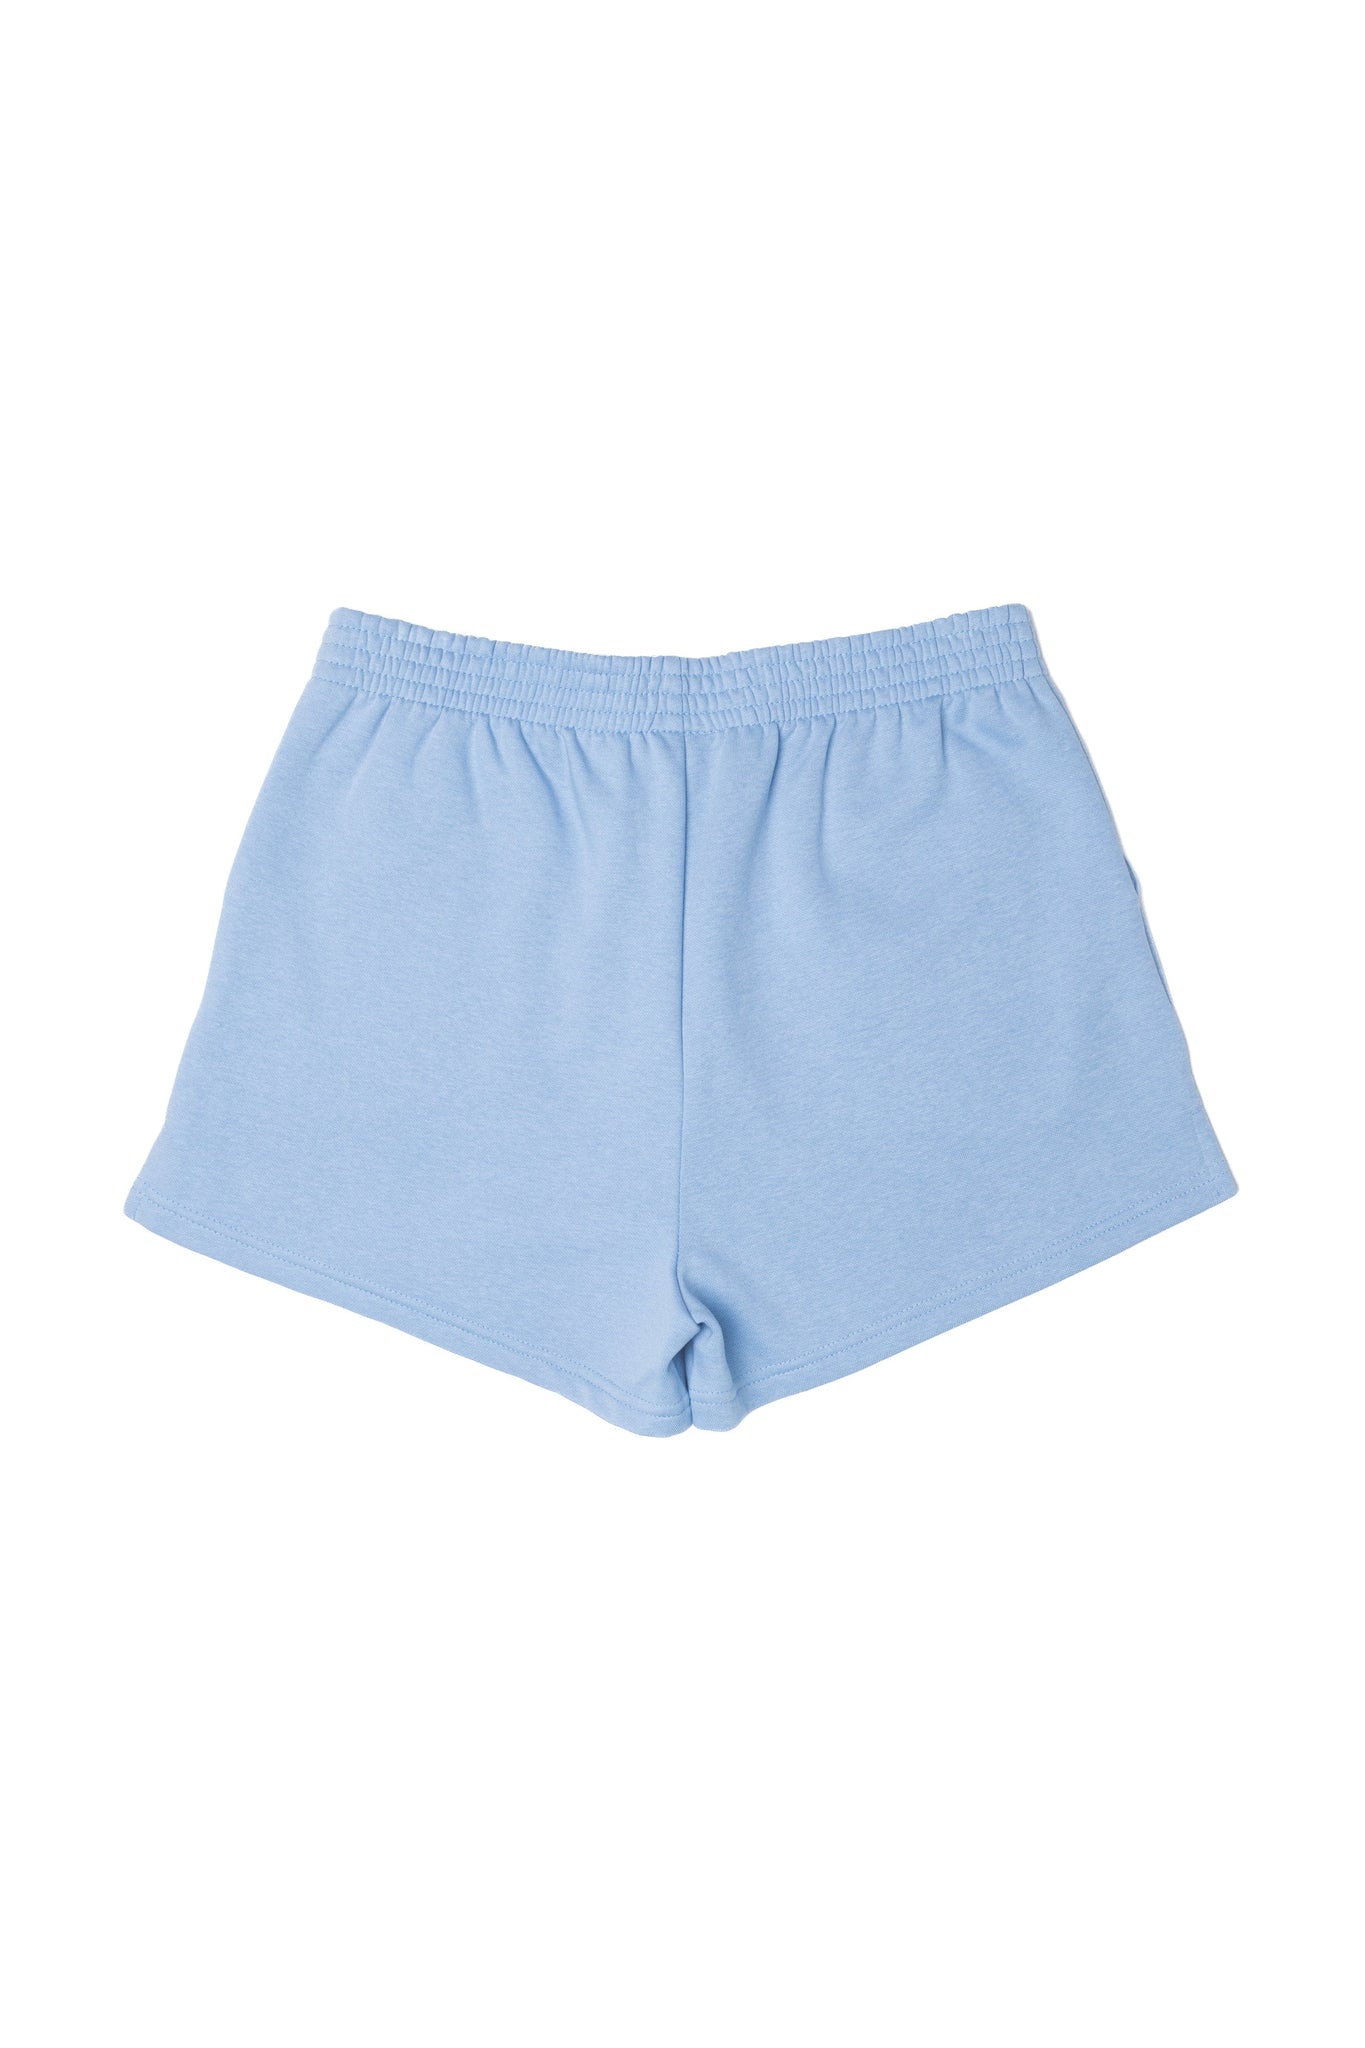 HERO - 7020 3’ Sweatshorts - Sky Blue Shorts